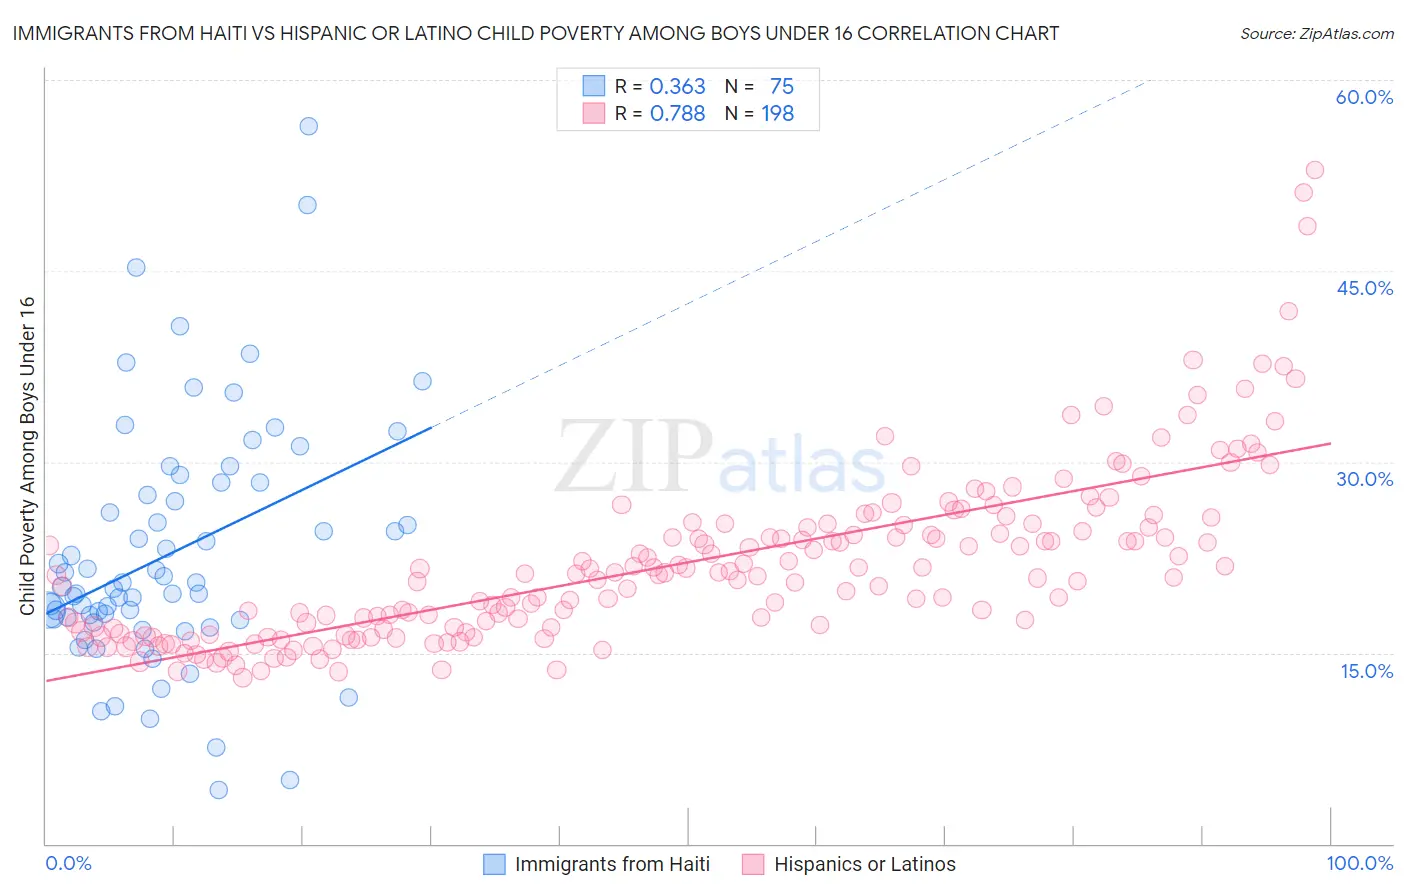 Immigrants from Haiti vs Hispanic or Latino Child Poverty Among Boys Under 16